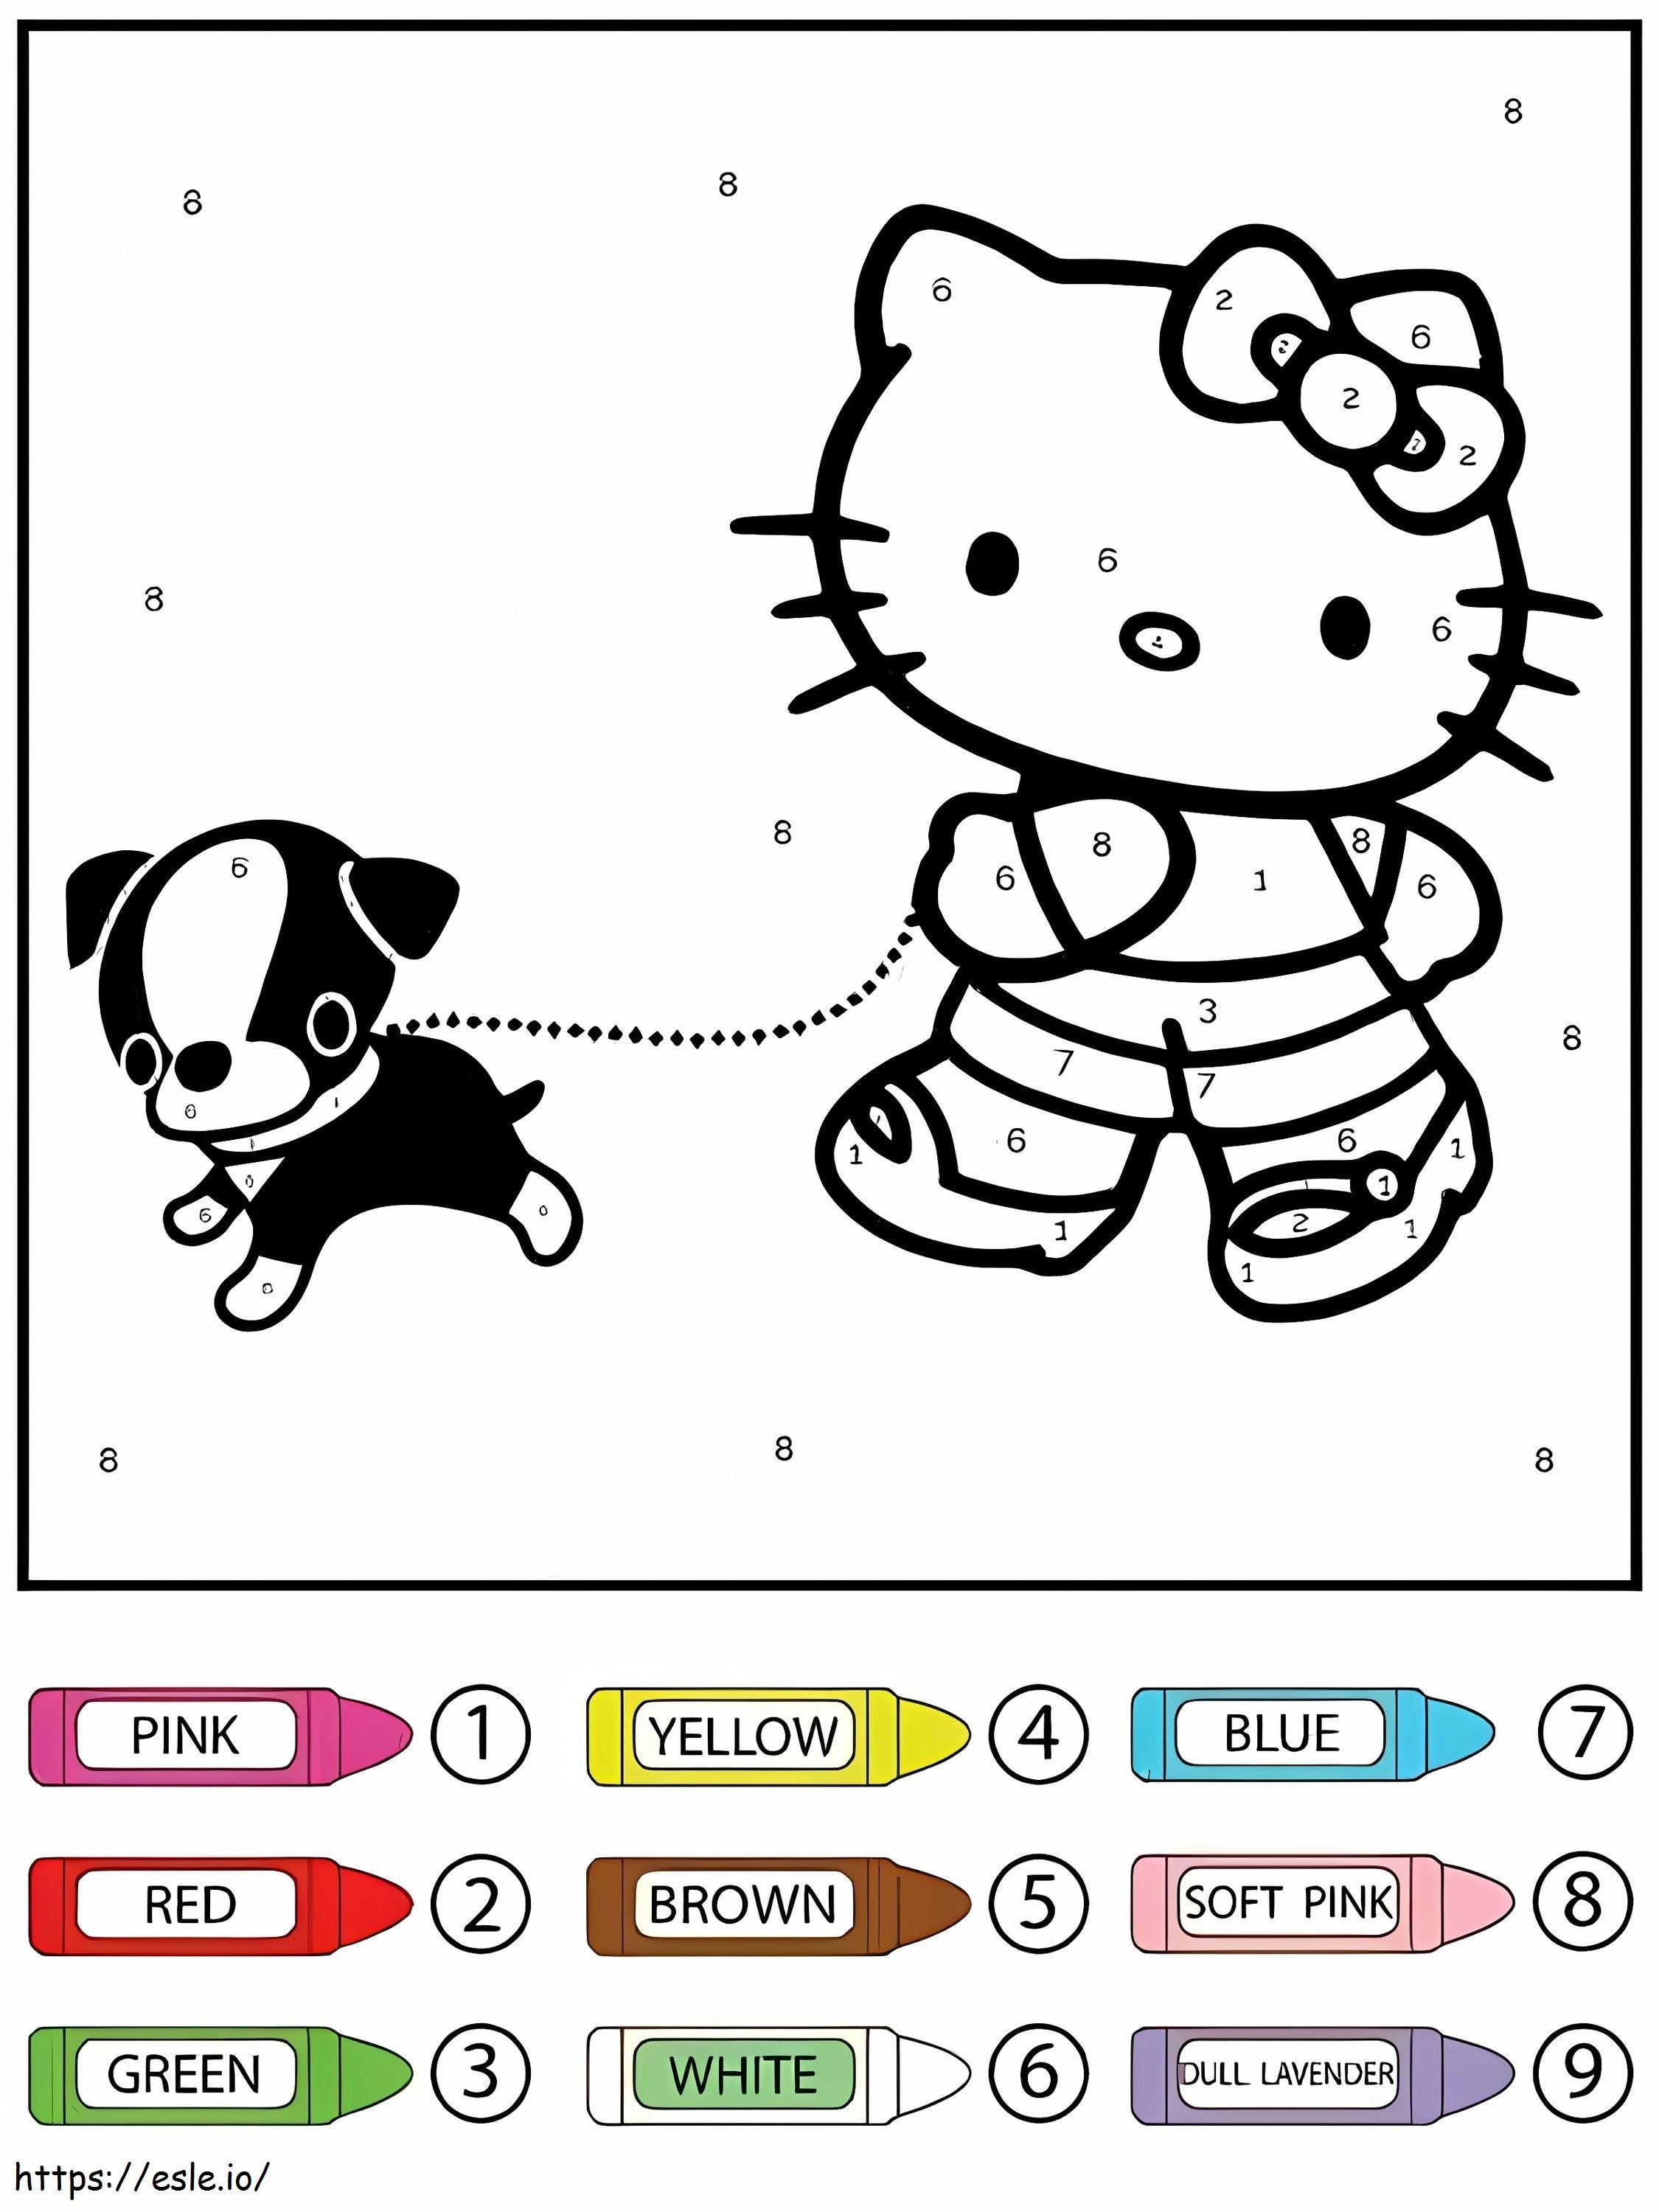 Numaraya Göre Hello Kitty Ve Evcil Hayvan Rengi boyama